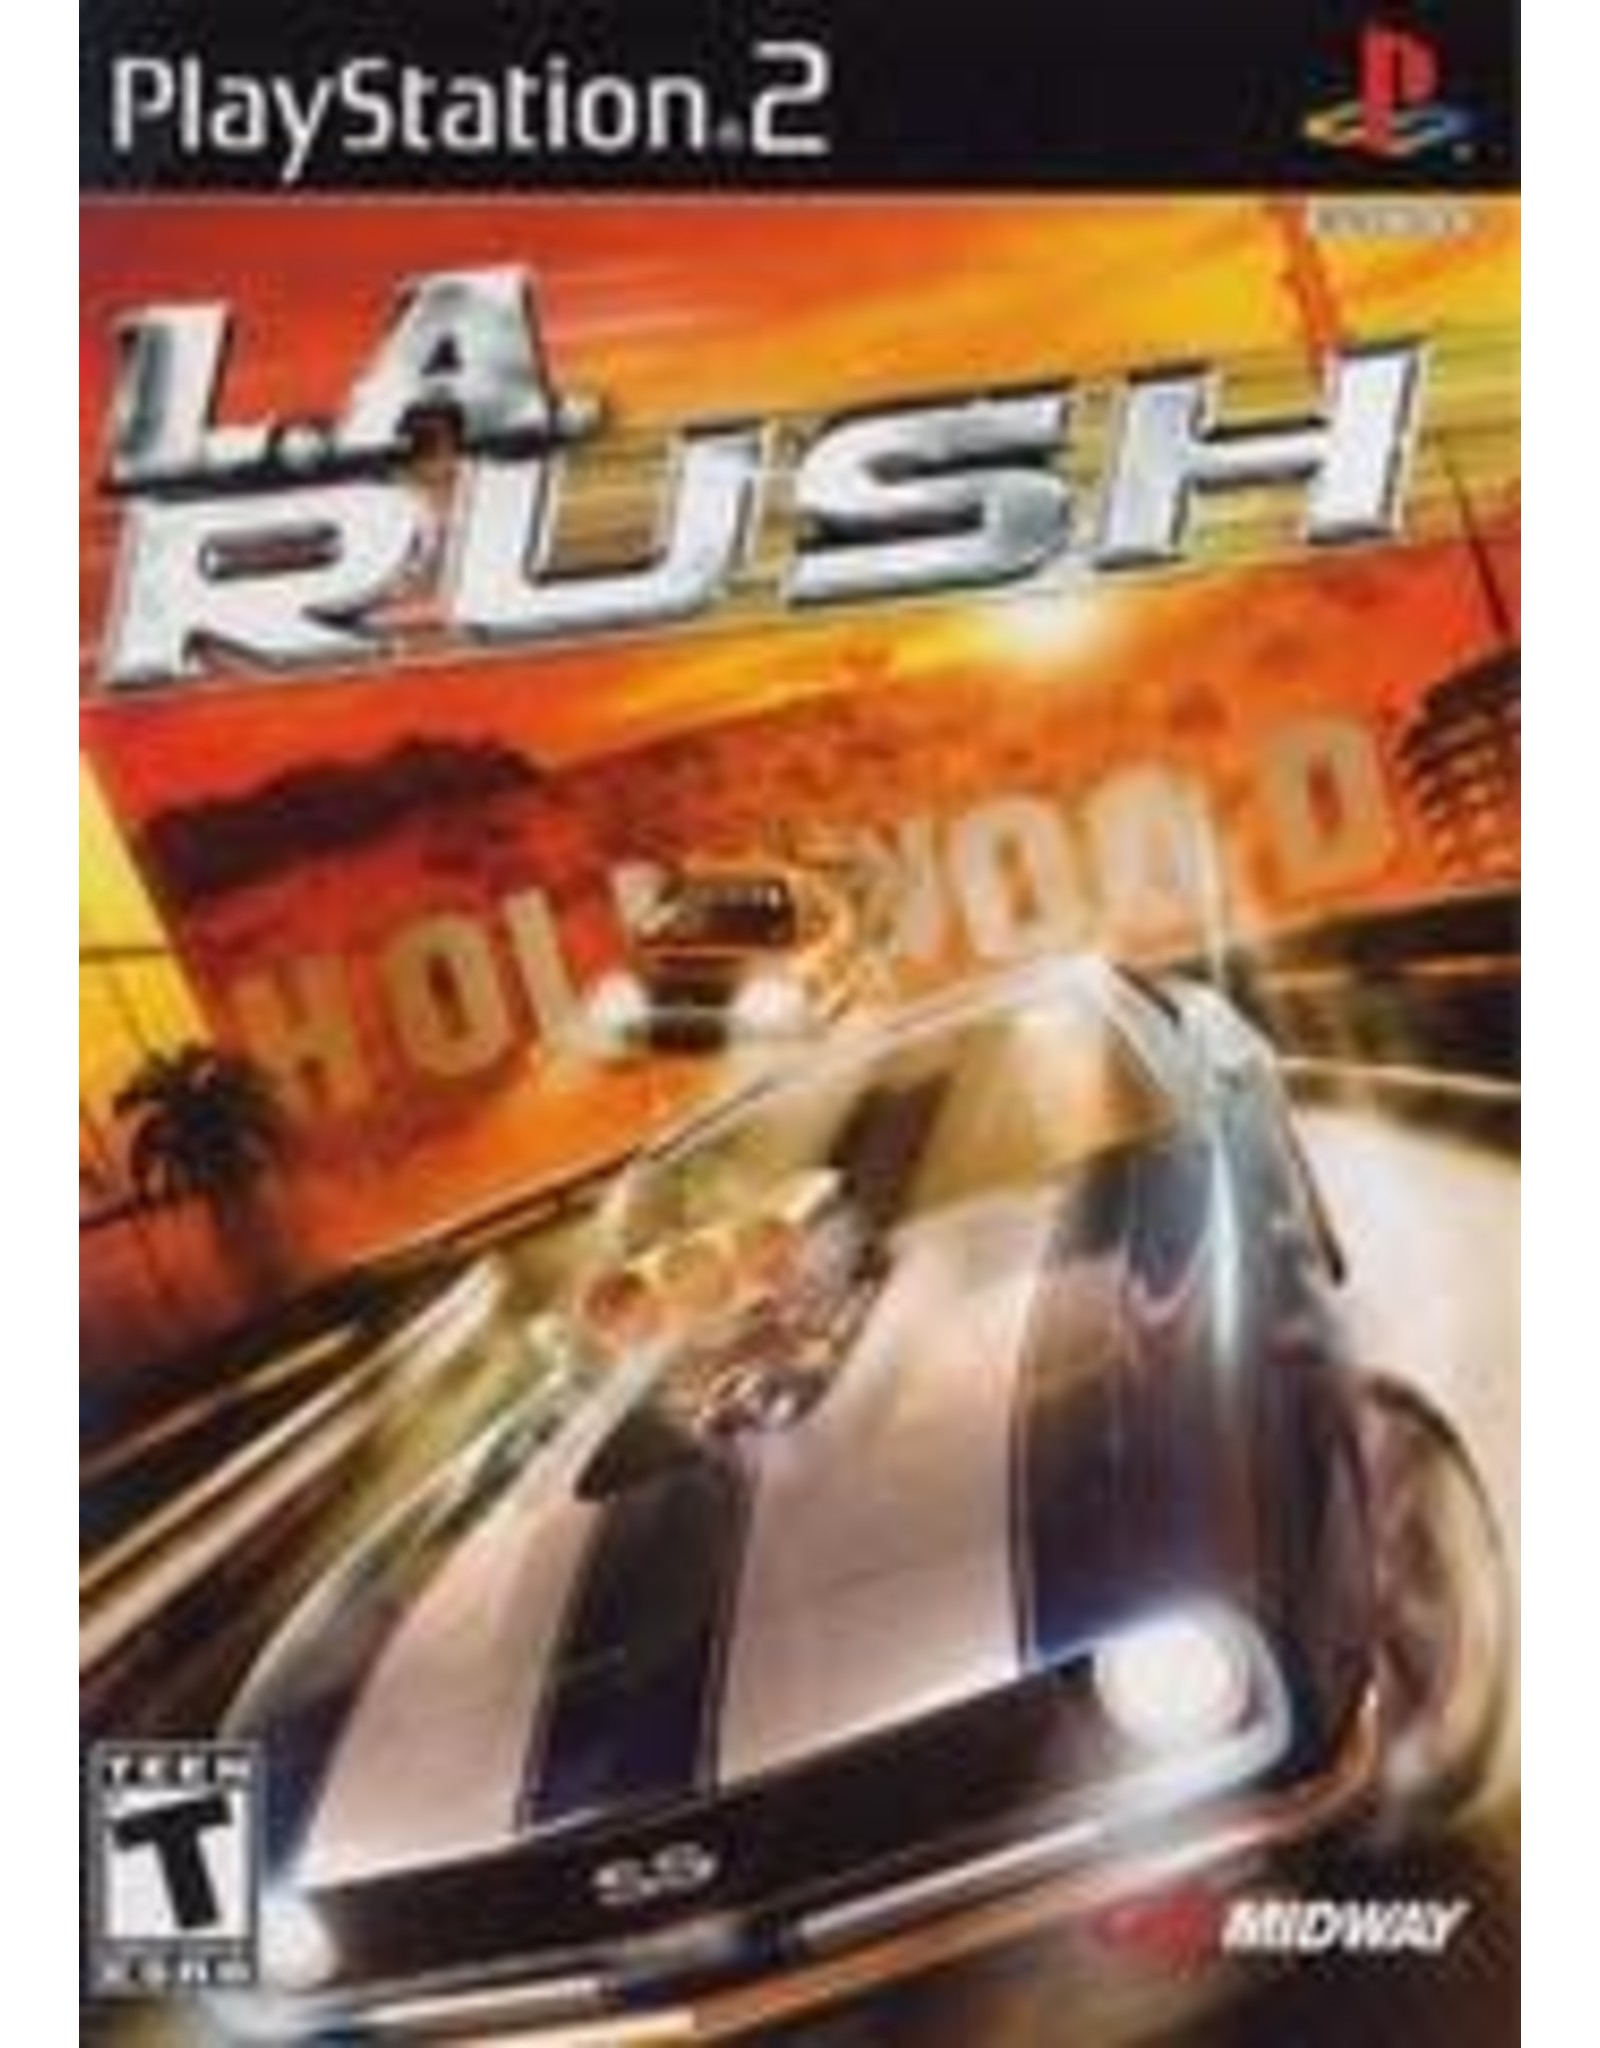 Playstation 2 LA Rush (Used)